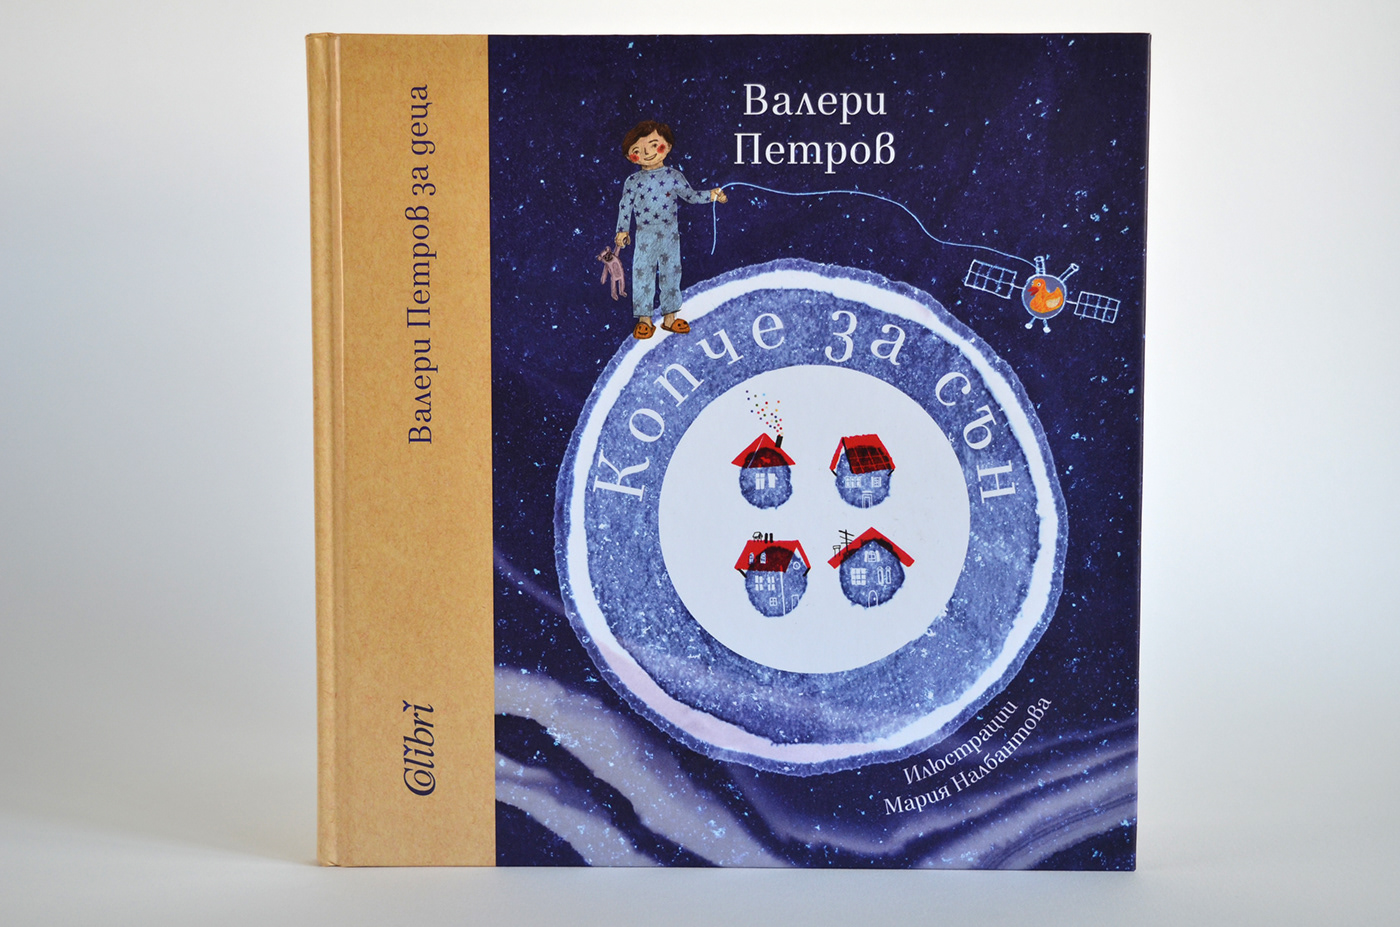 Maria Nalbantova ILLUSTRATION  valeri petrov Colibri Publishers Button for Dreaming fairy tales books Children's Books